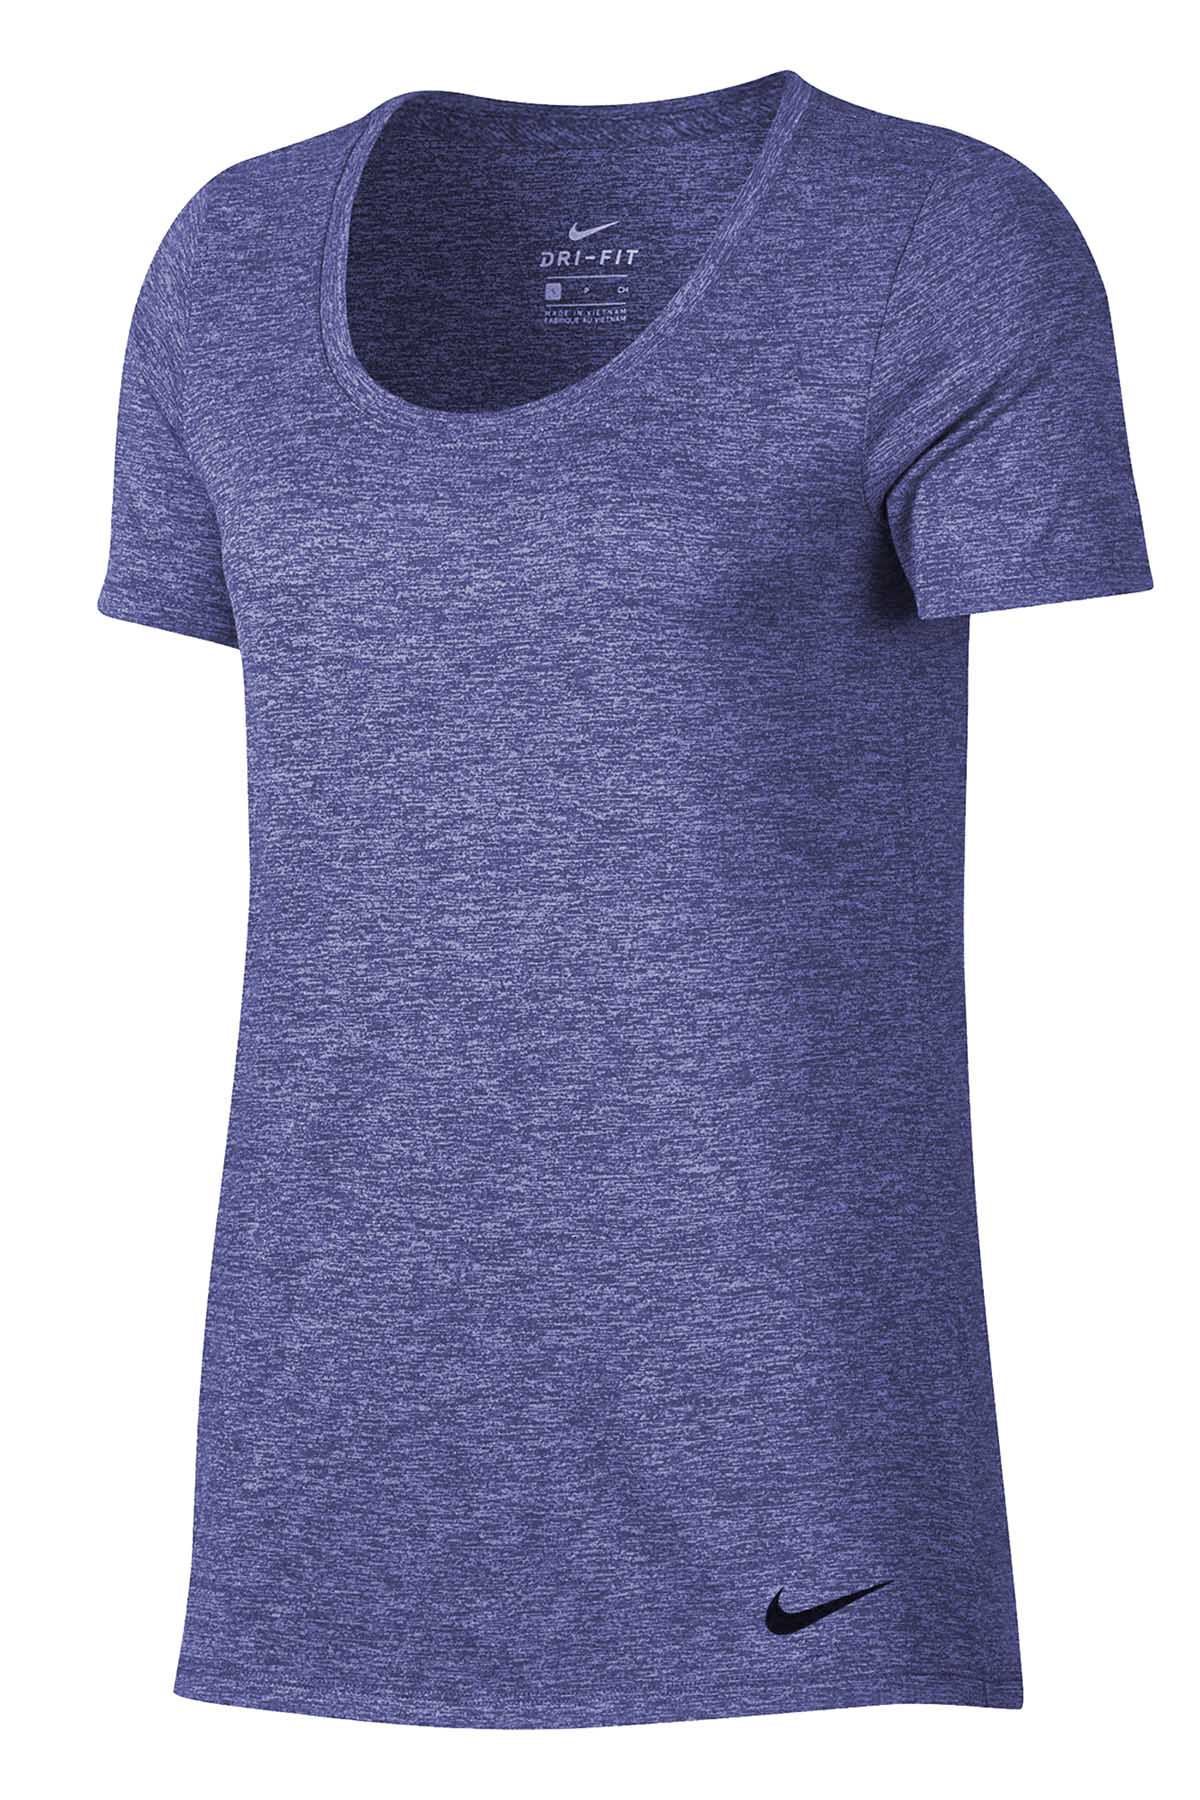 Nike Purple Comet Legend Veneer Dri-FIT Training T-Shirt